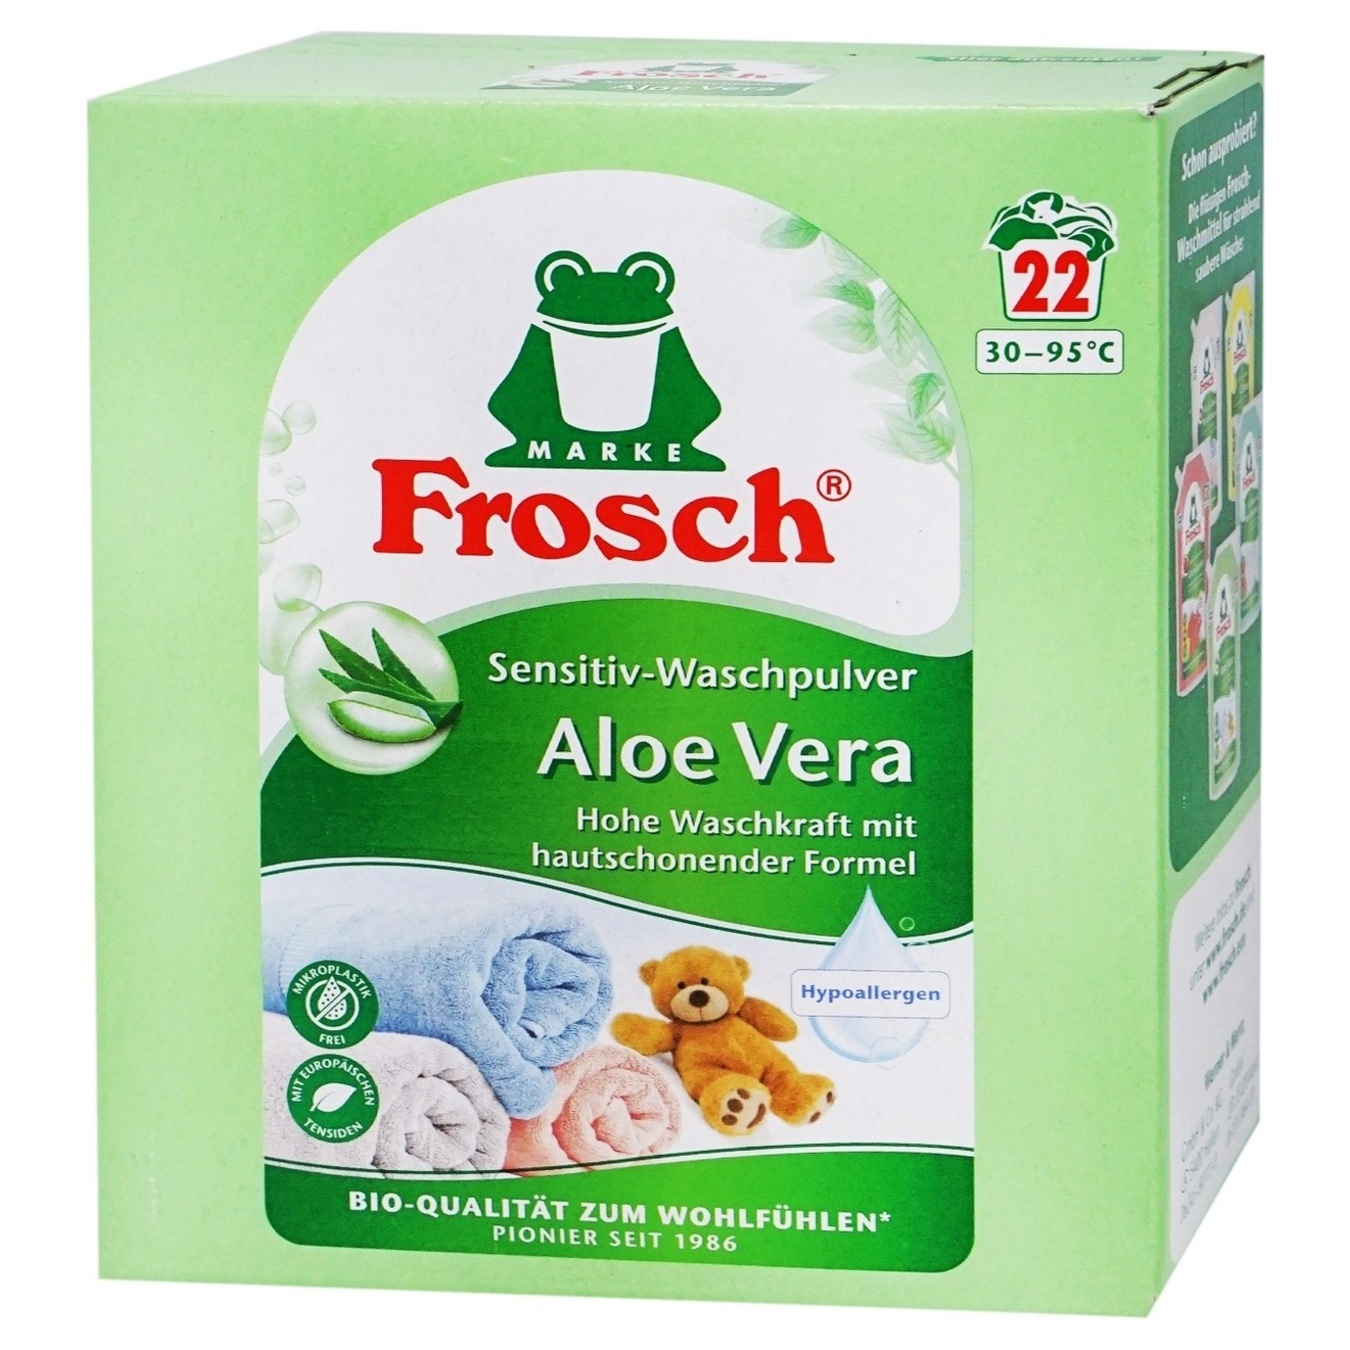 Washing powder Frosch Color Aloe Vera concentrate 1.45 kg